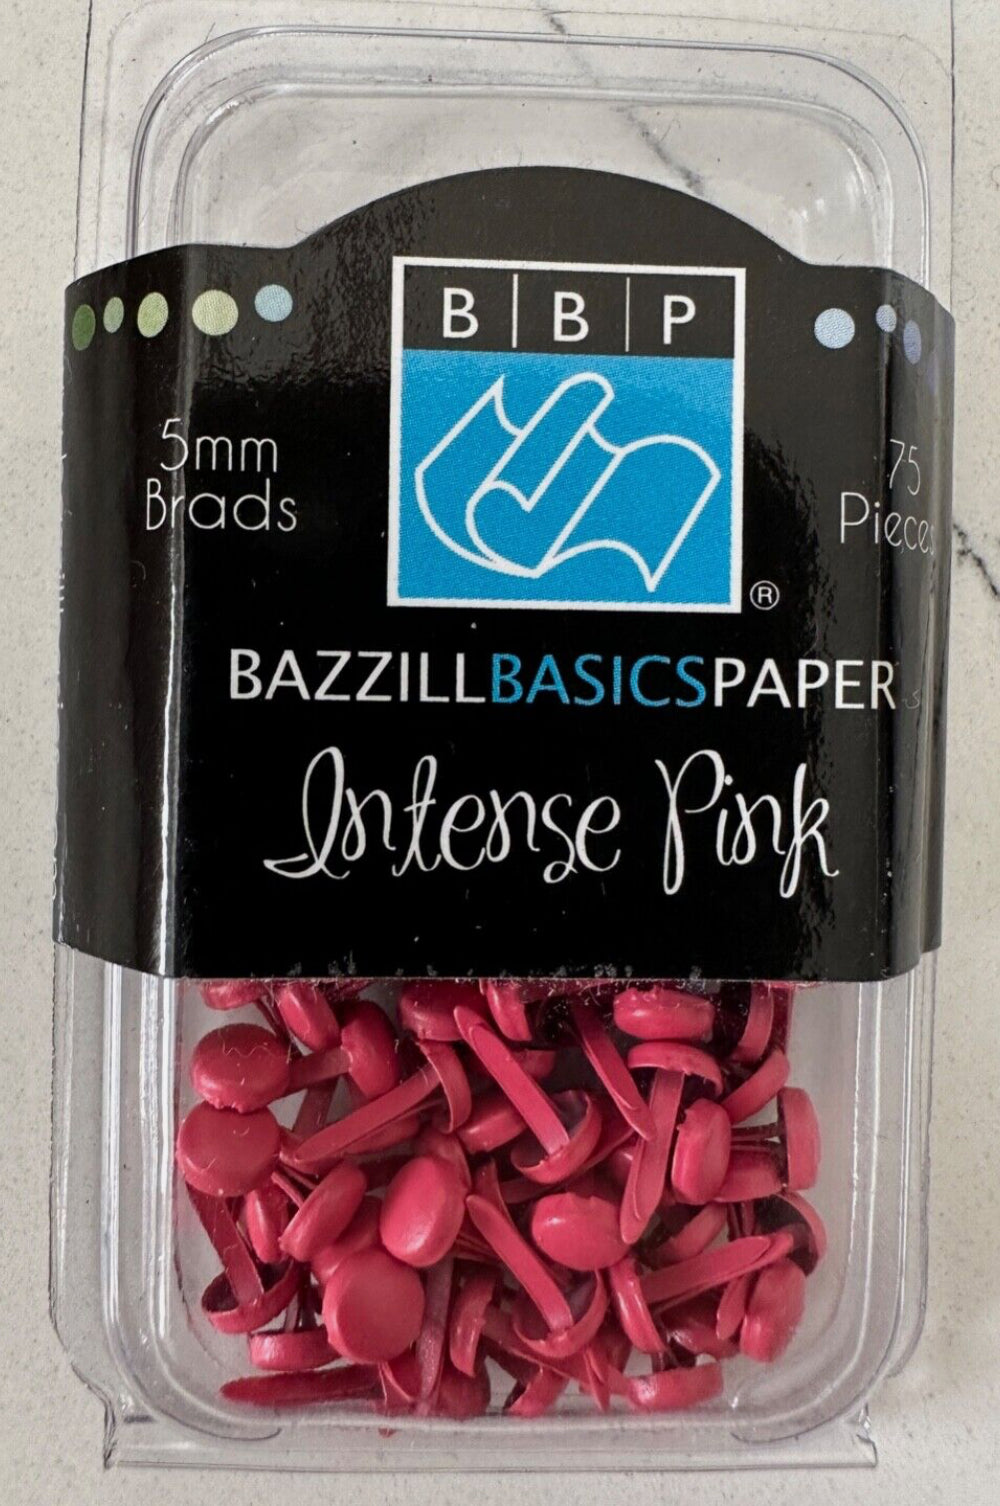 Bazzill Basics Paper - 5mm Brads - Intense Pink